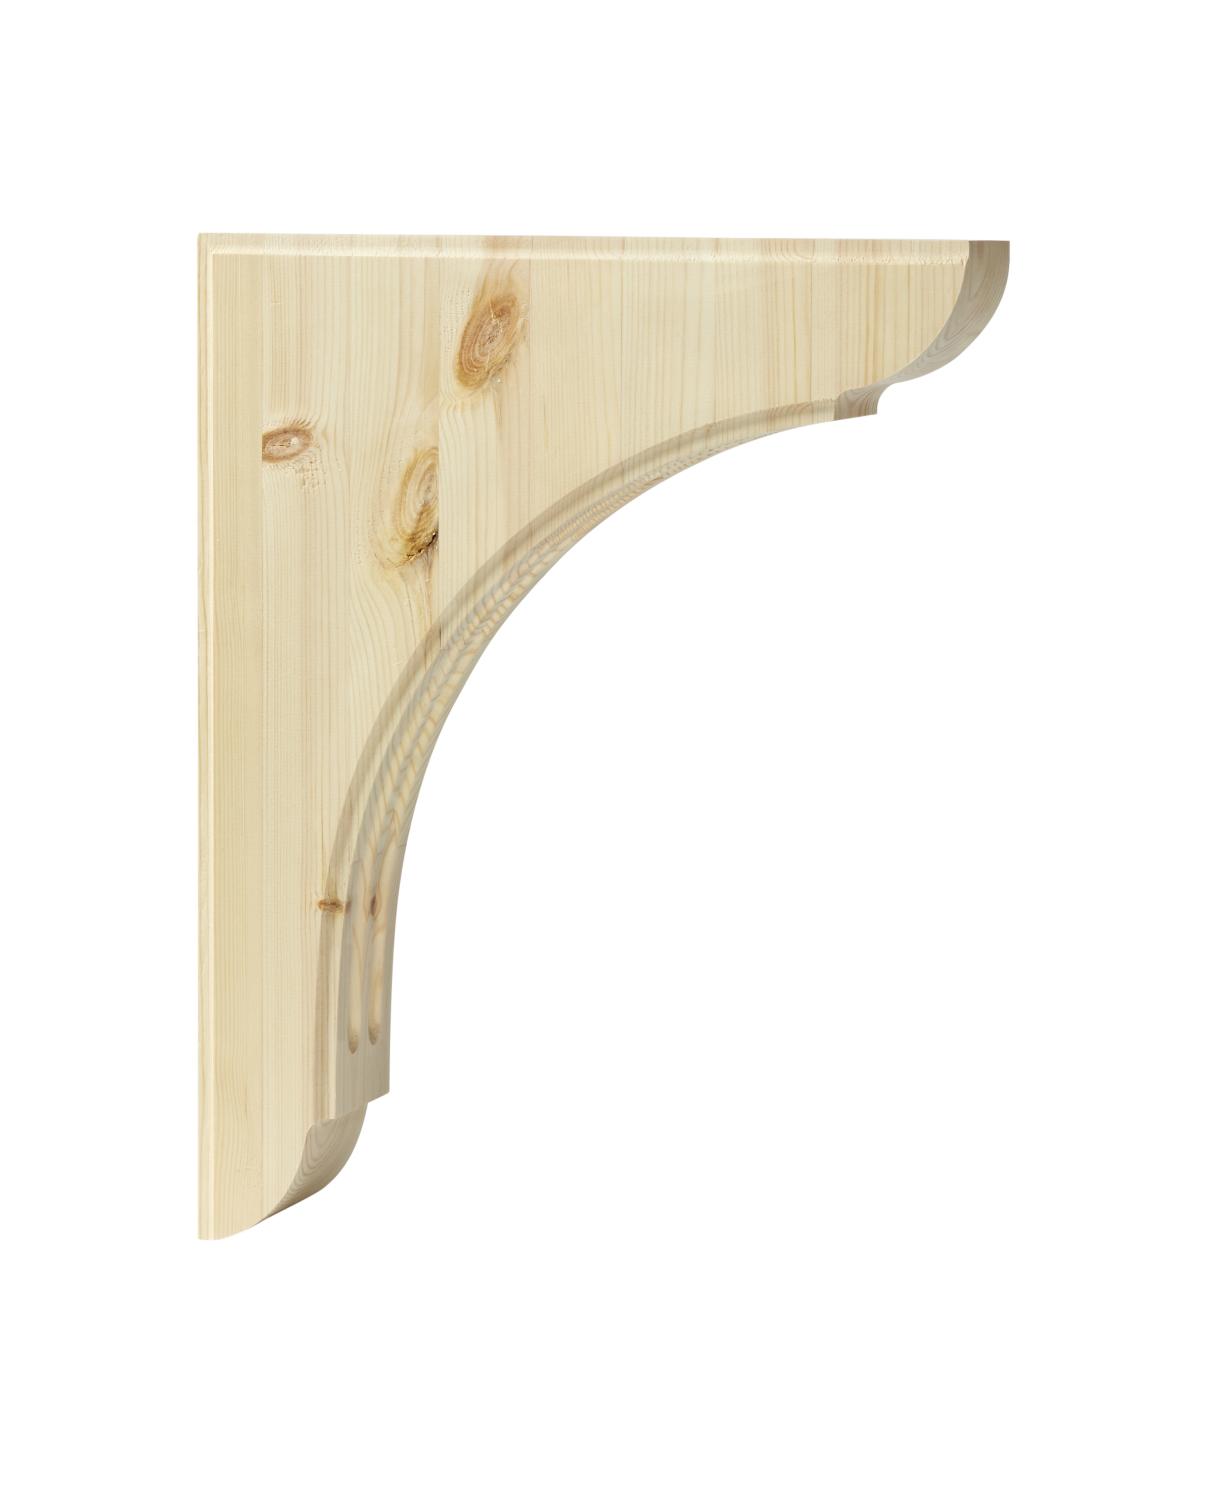 Old-fashioned wooden shelf bracket in pine - Model 308 - Wooden bracket in vintage style for shelving - old style